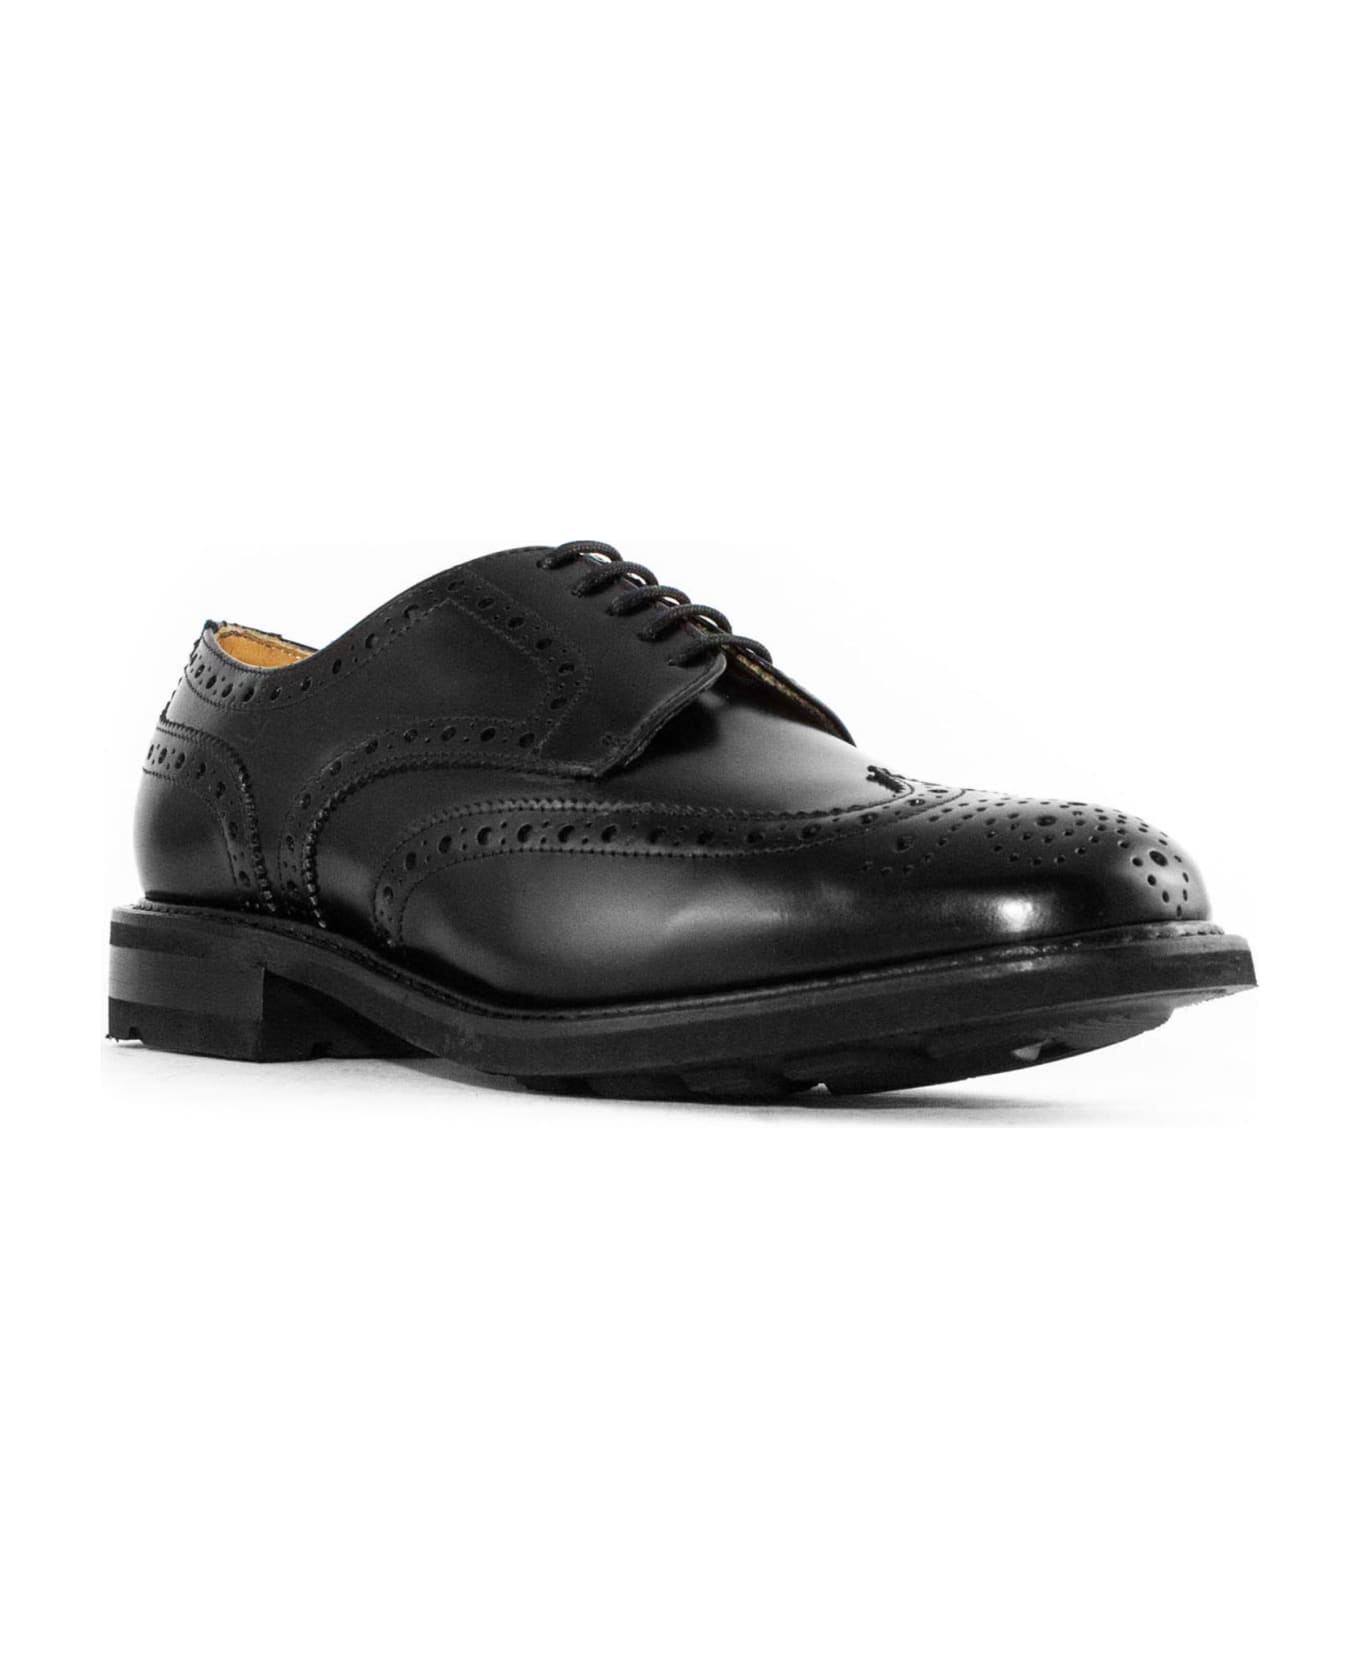 Berwick 1707 Black Shiny Leather Derby Shoes - Nero